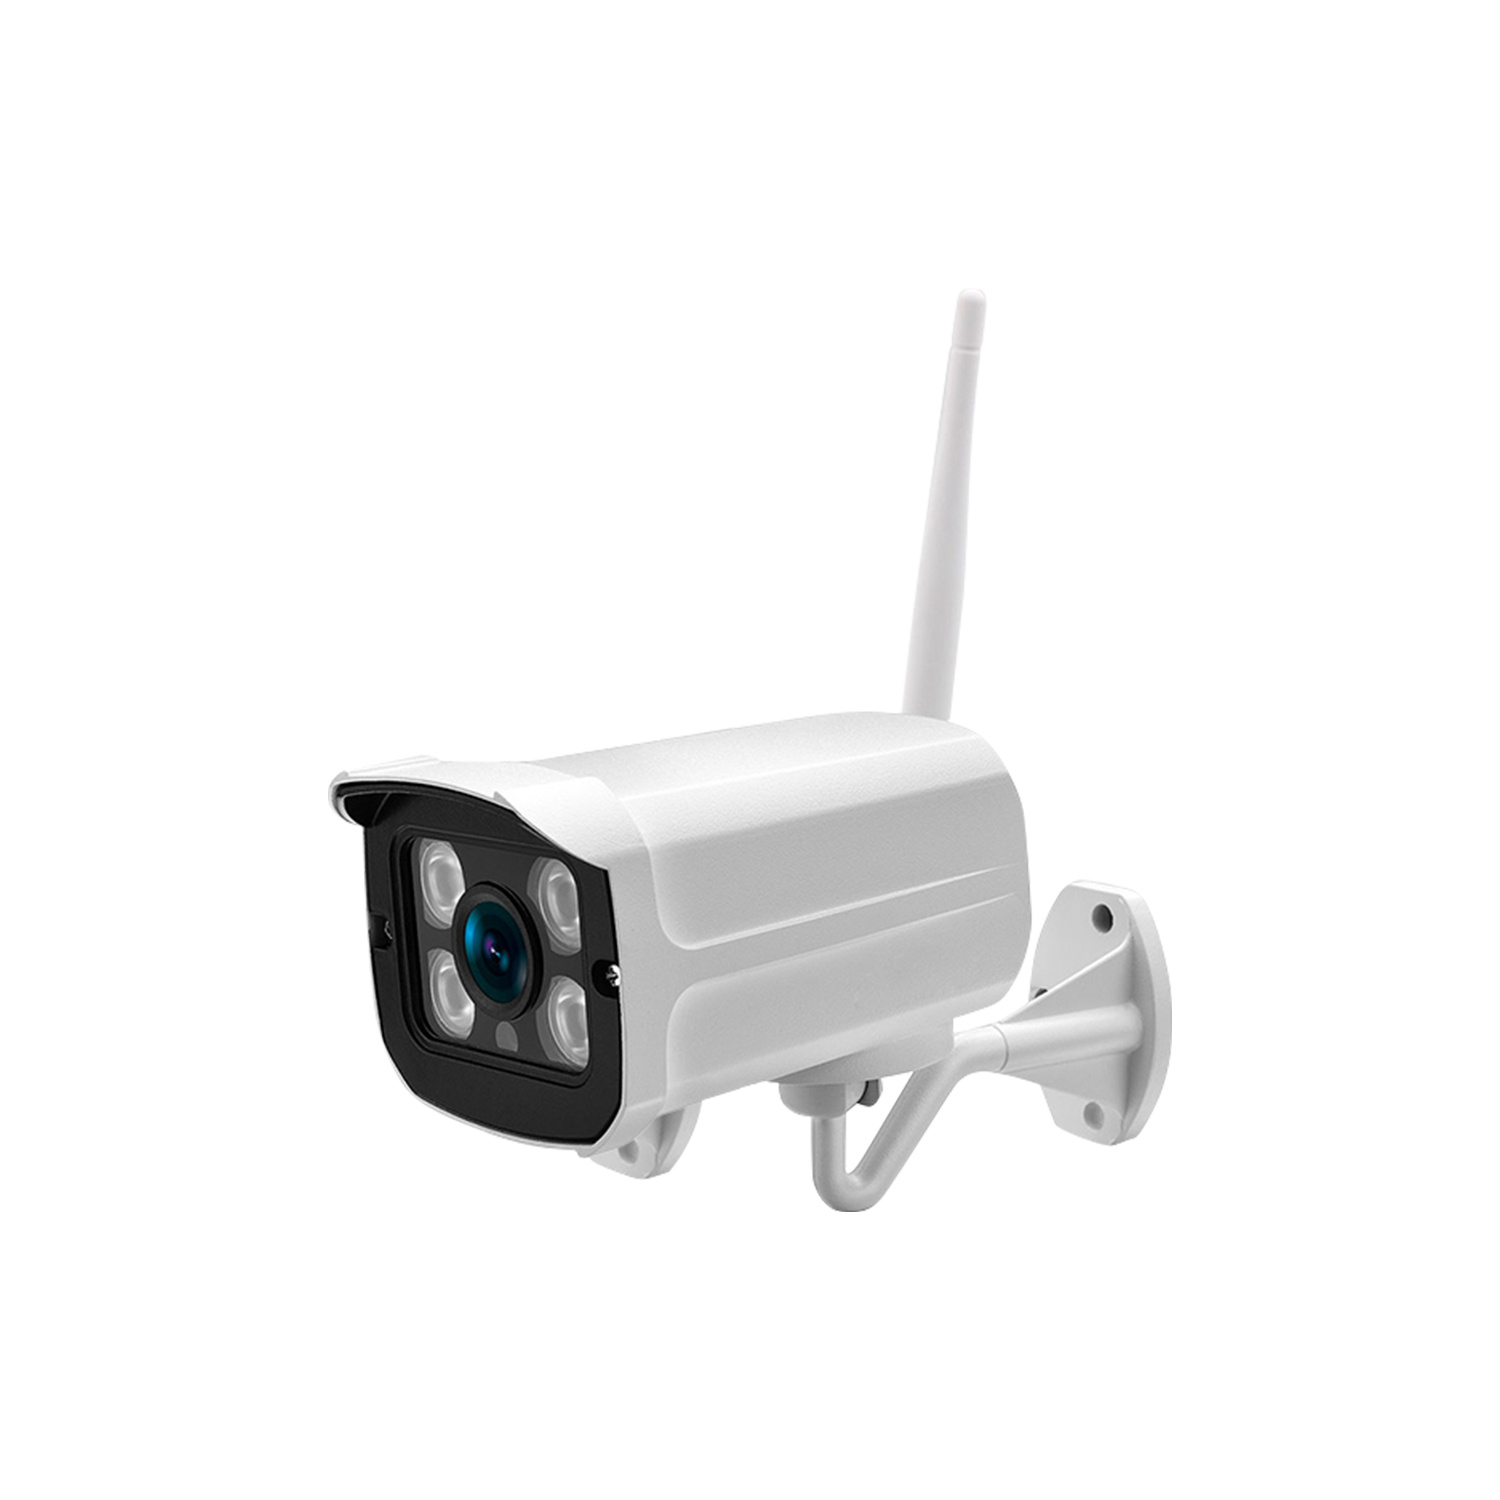 WiFi NVR Kit 10" LCD Screen Wireless Kit Surveillance Cameras 8CH 3MP 2.4G Tuya